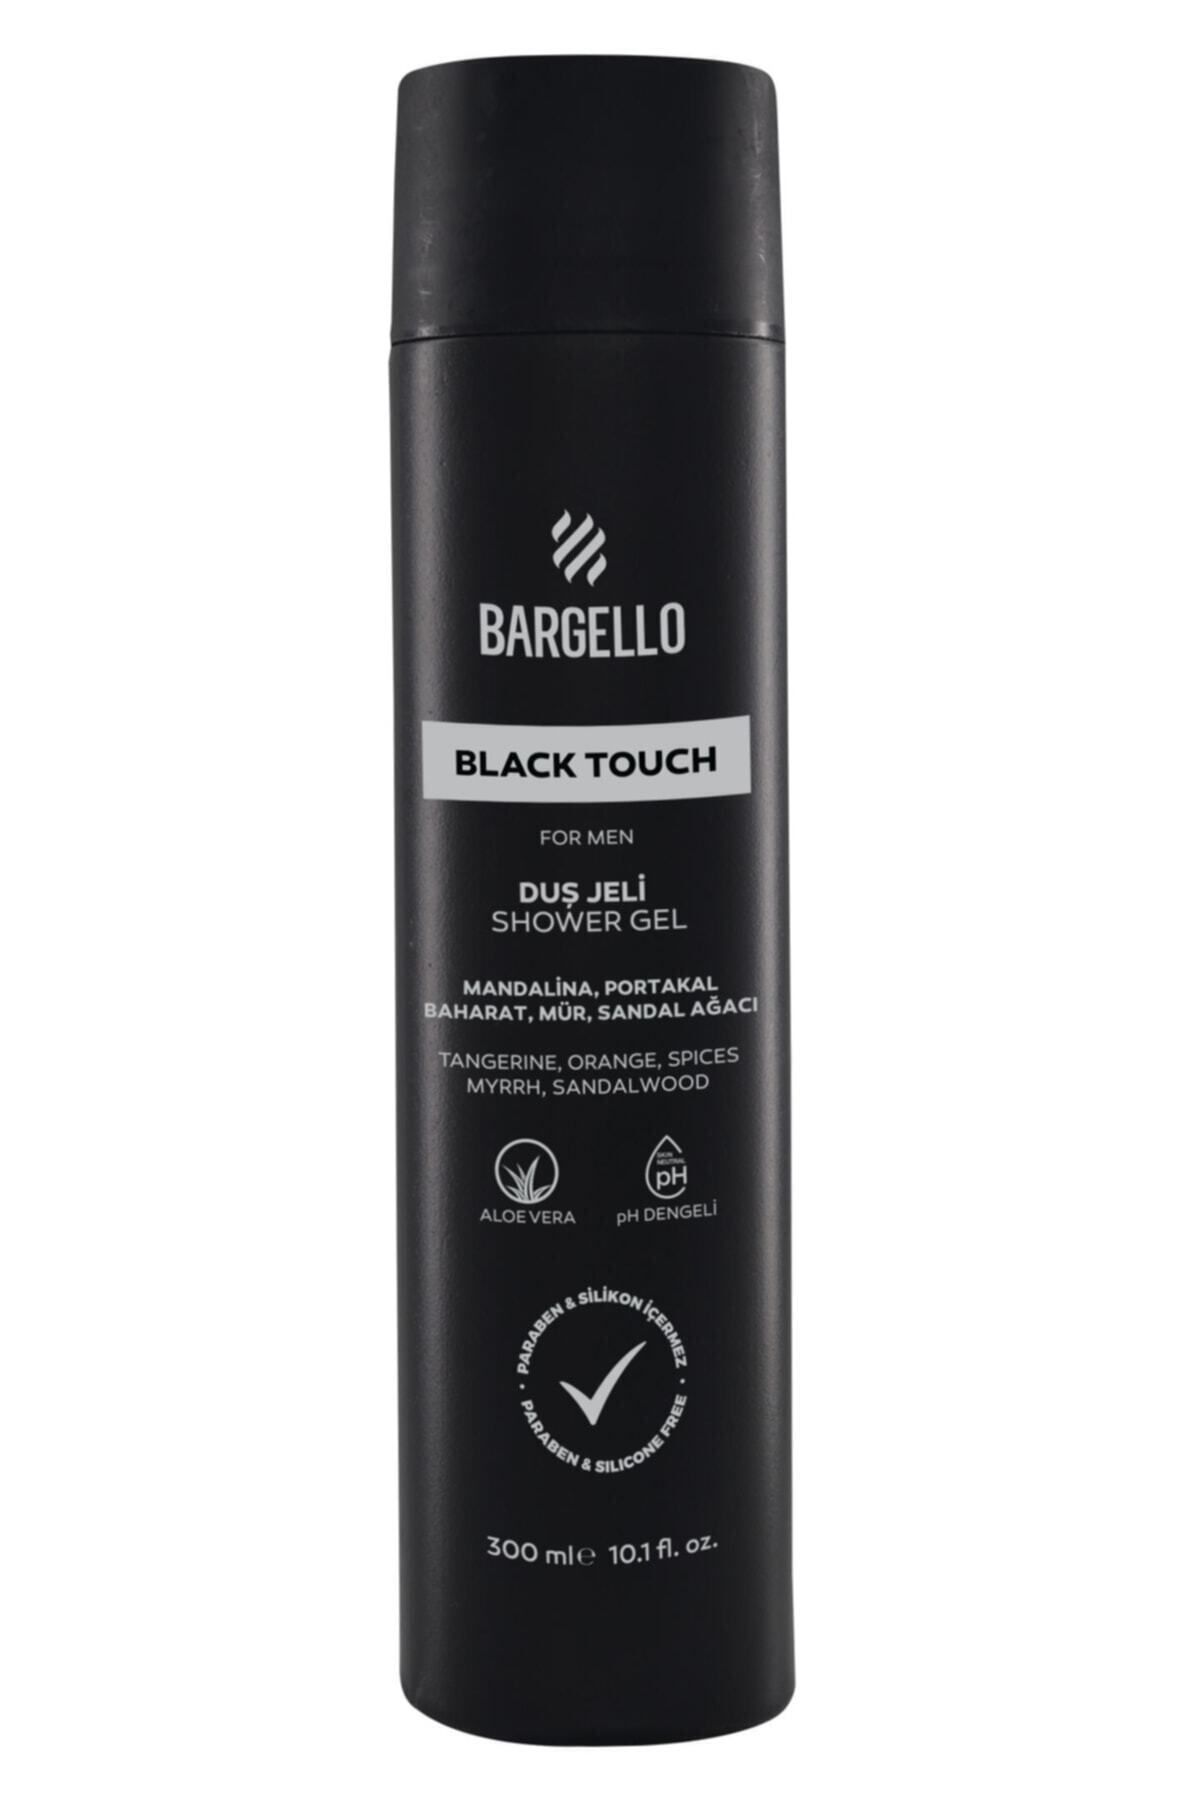 Bargello Black Touch Duş Jeli